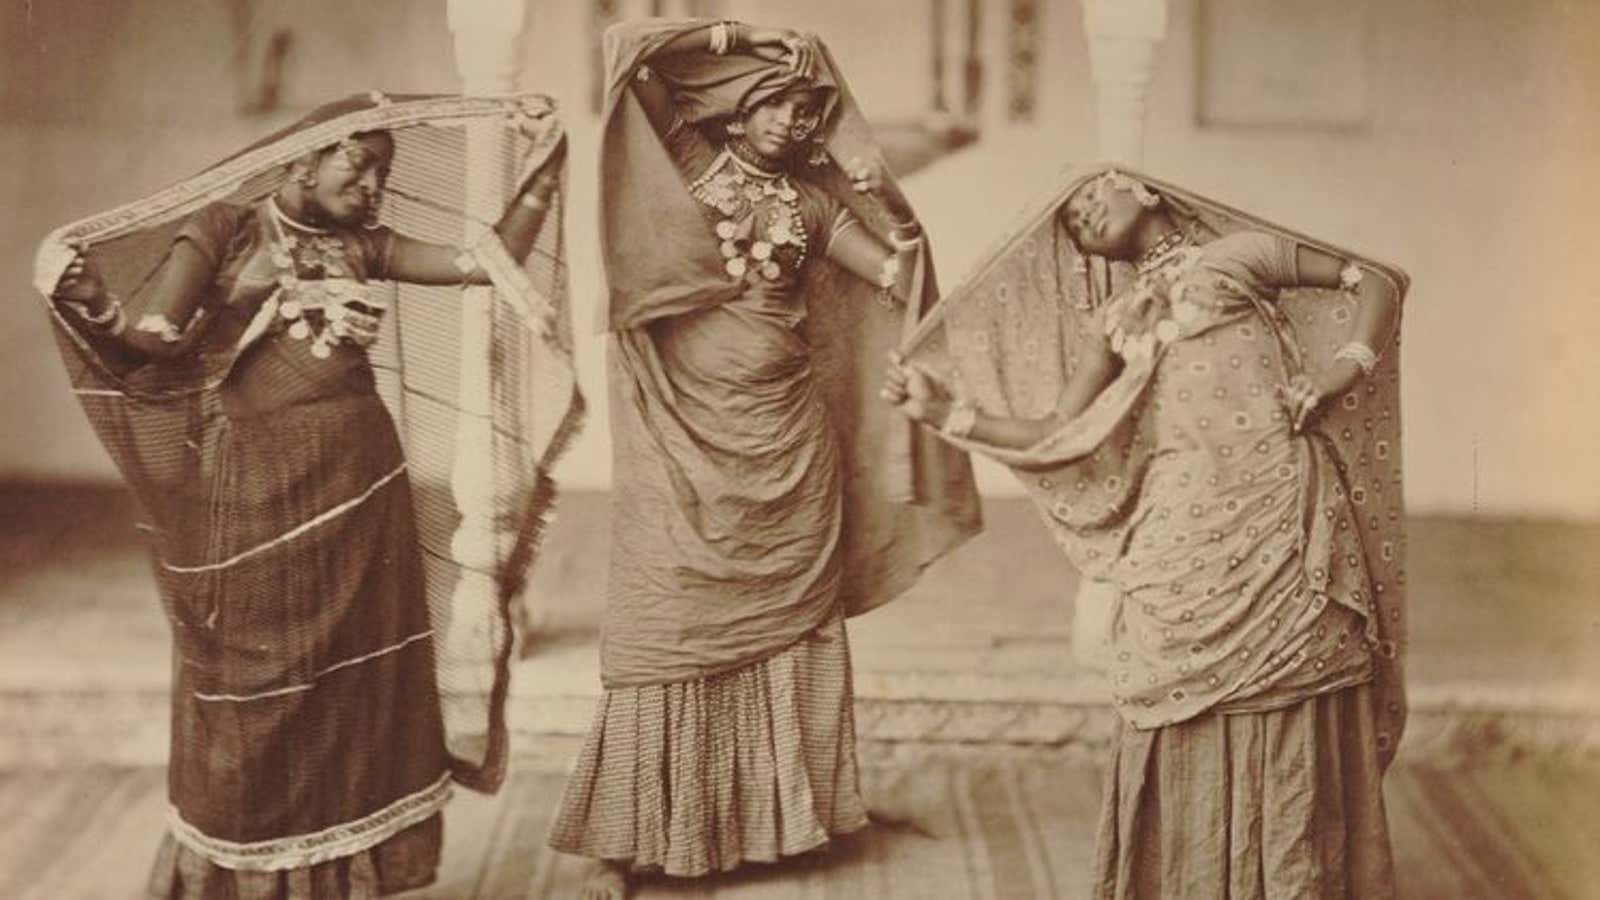 Dancers (nautch women) in India